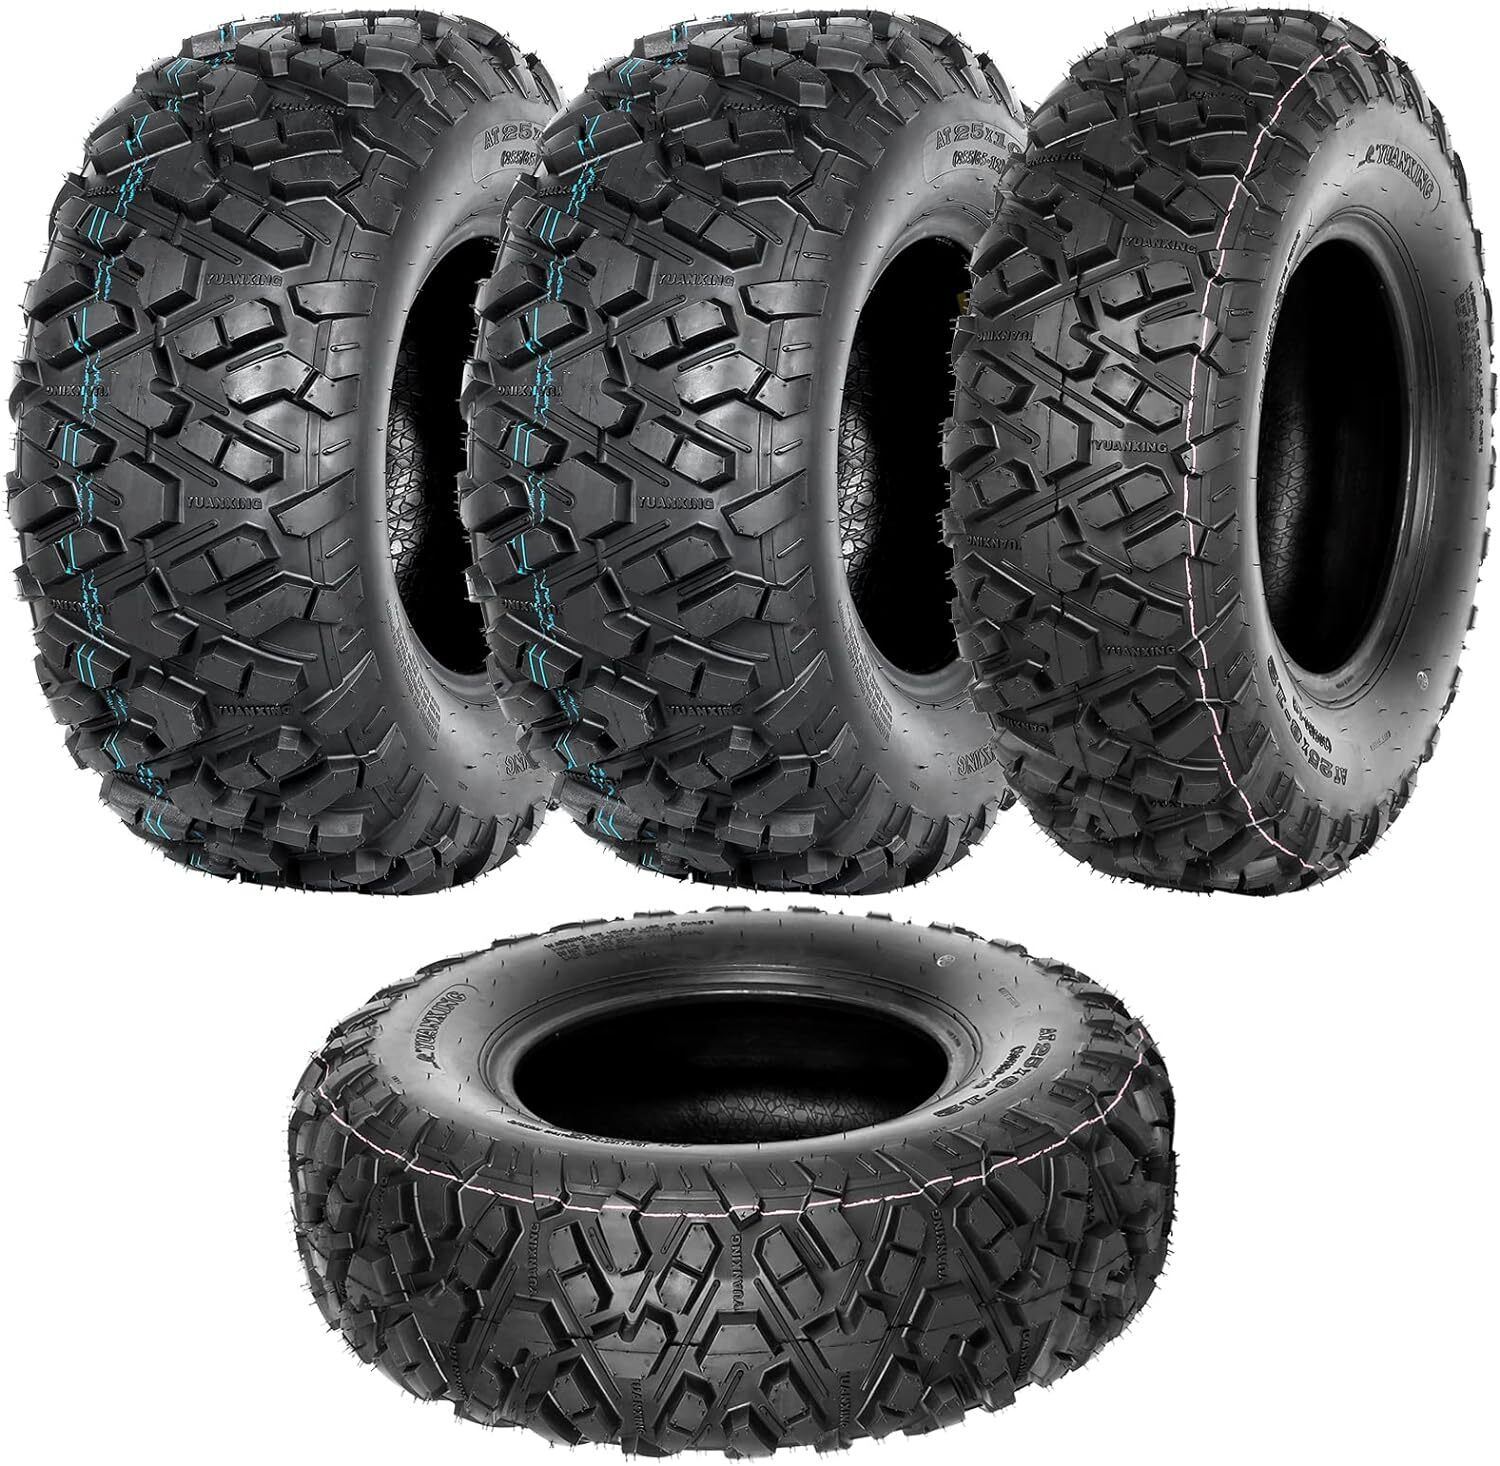 Set of 4, 25x8-12 & 25x10-12 Replacement ATV Tires, 6 Ply All Terrain UTV Tires